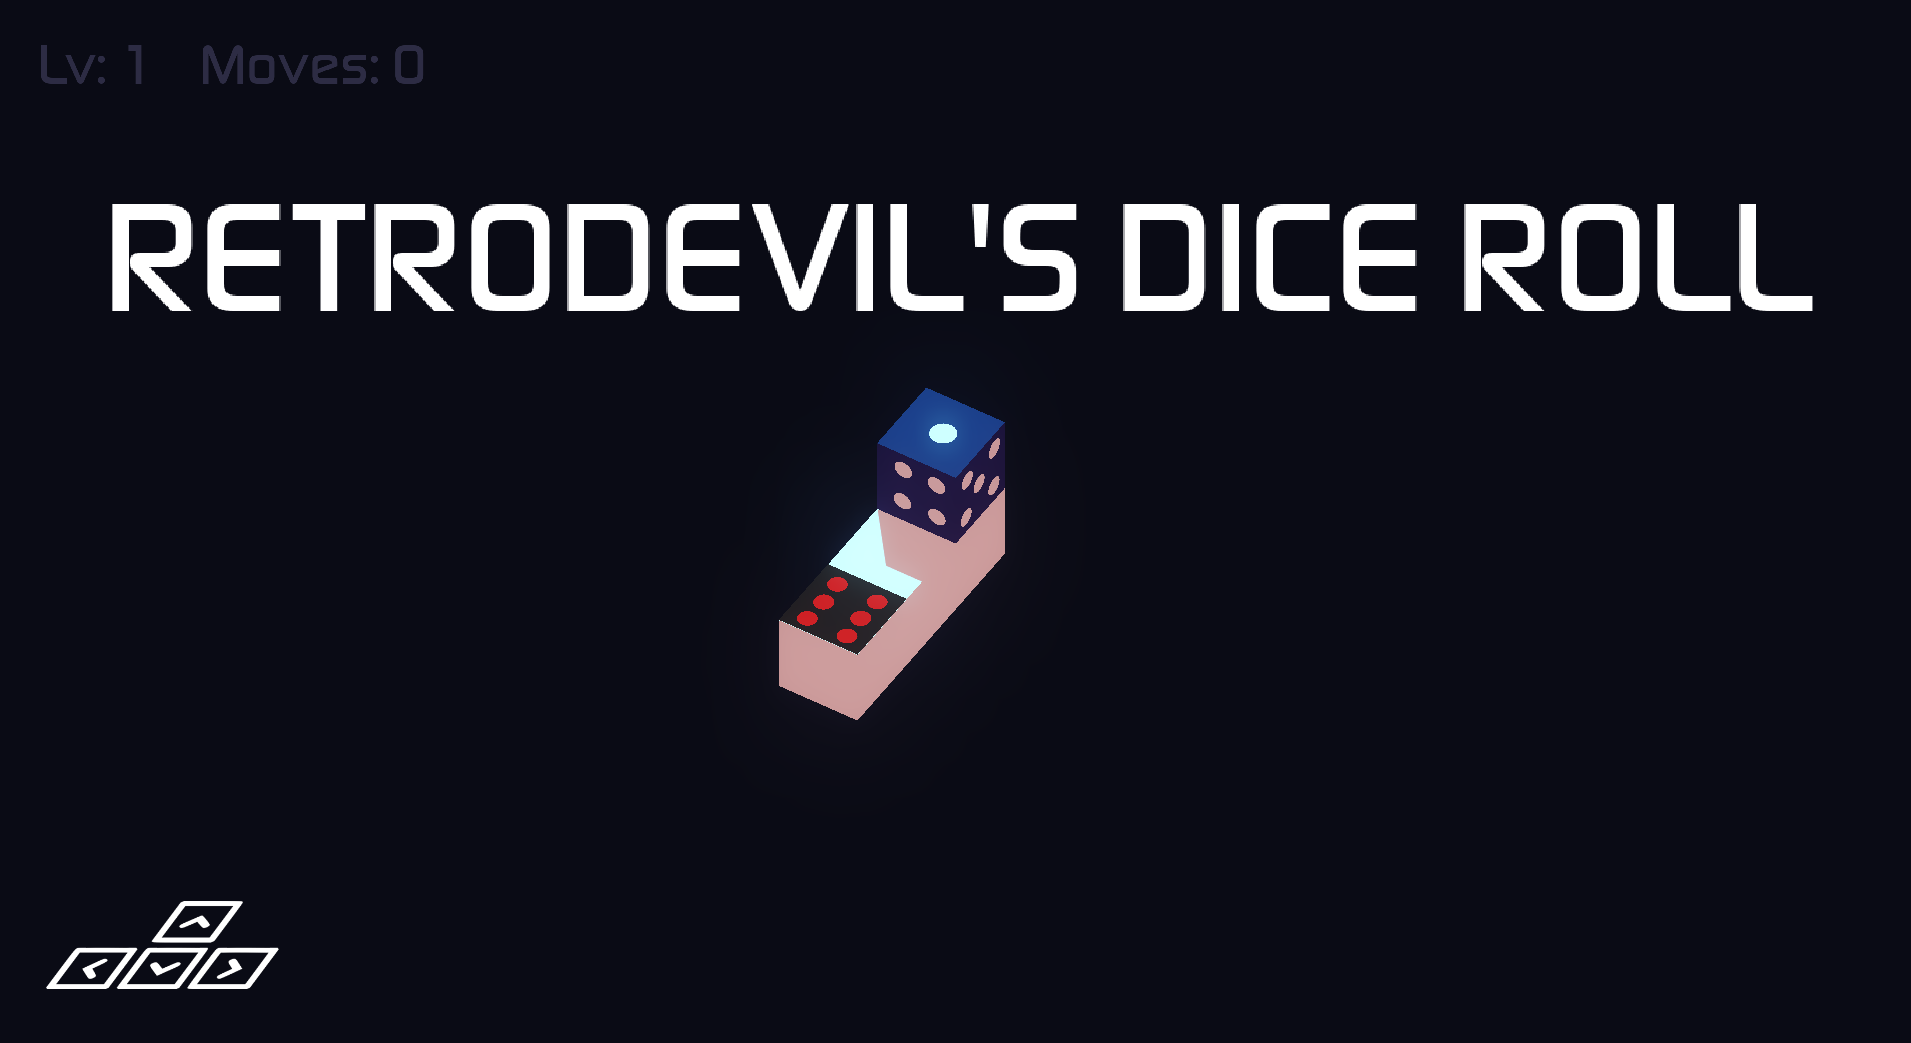 Retrodevil's Dice Roll